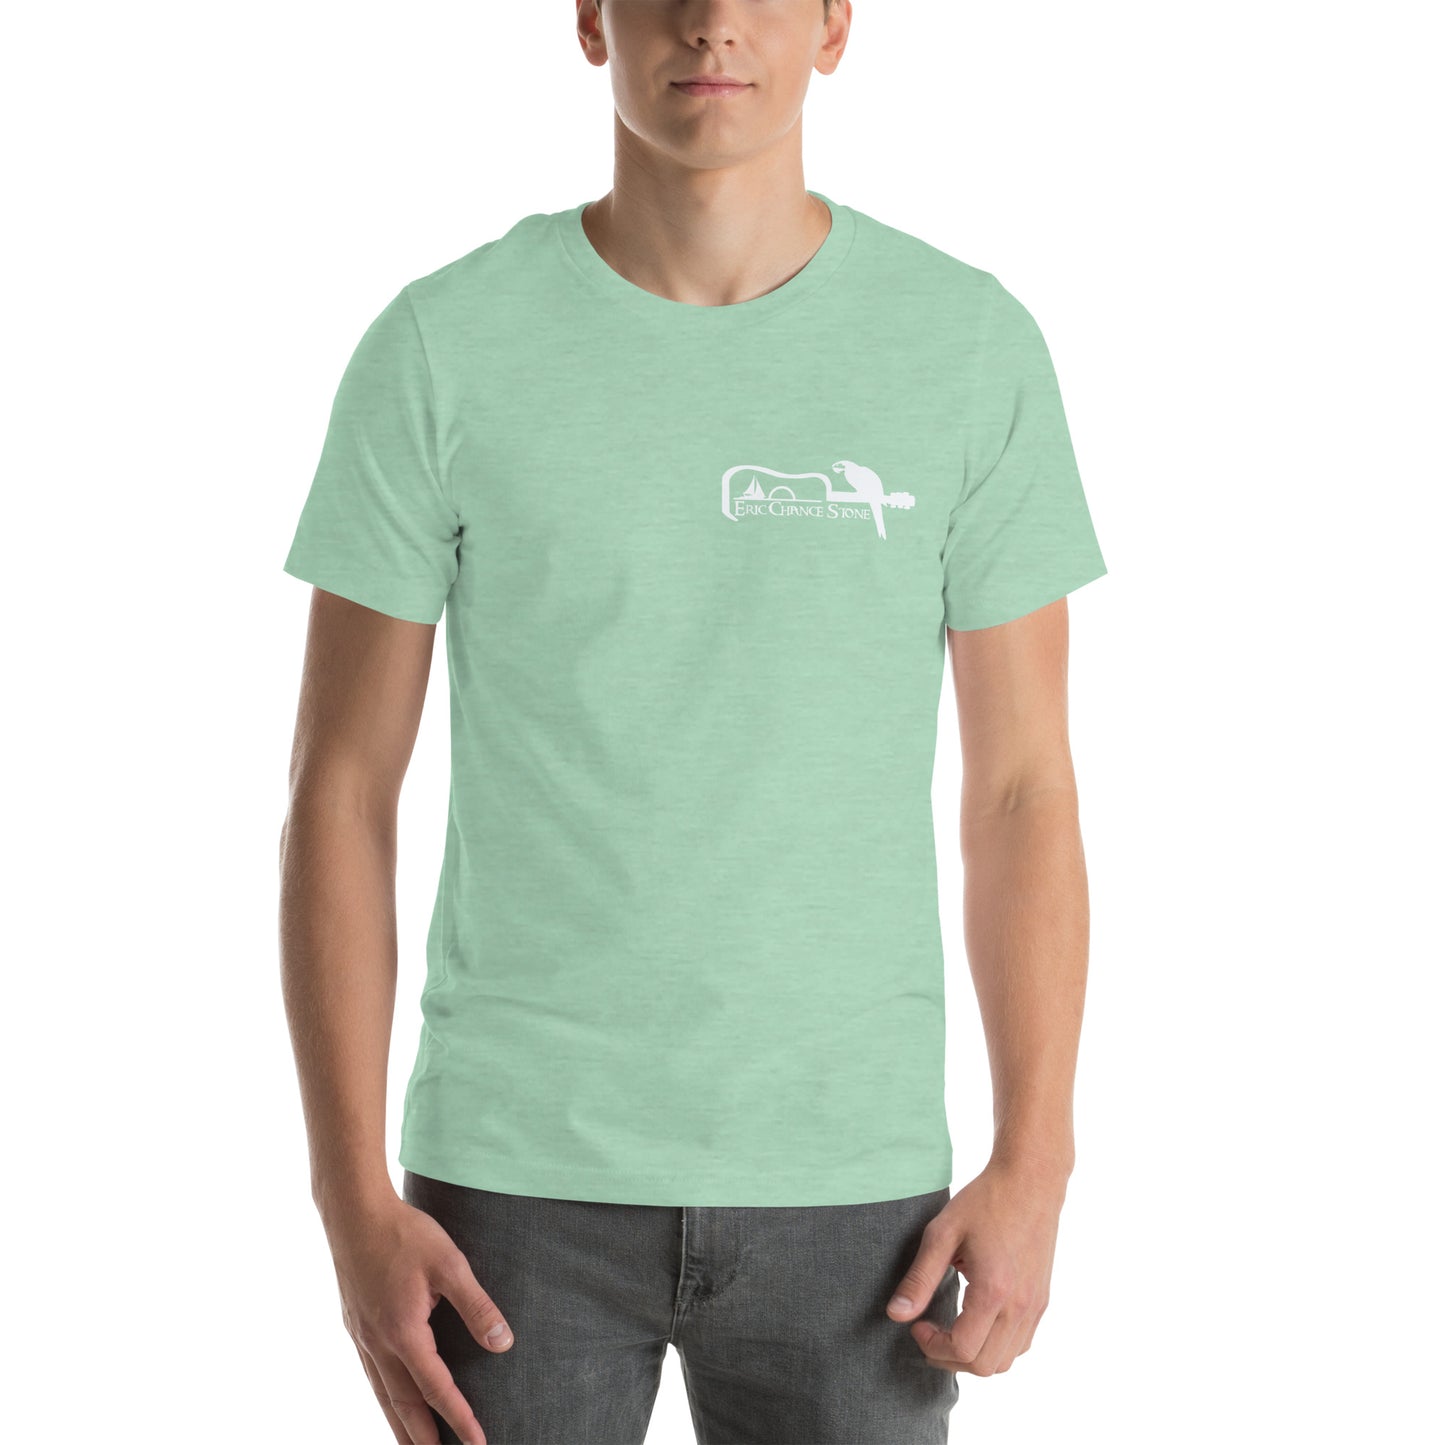 Gary's Island - Unisex t-shirt - Light Colors